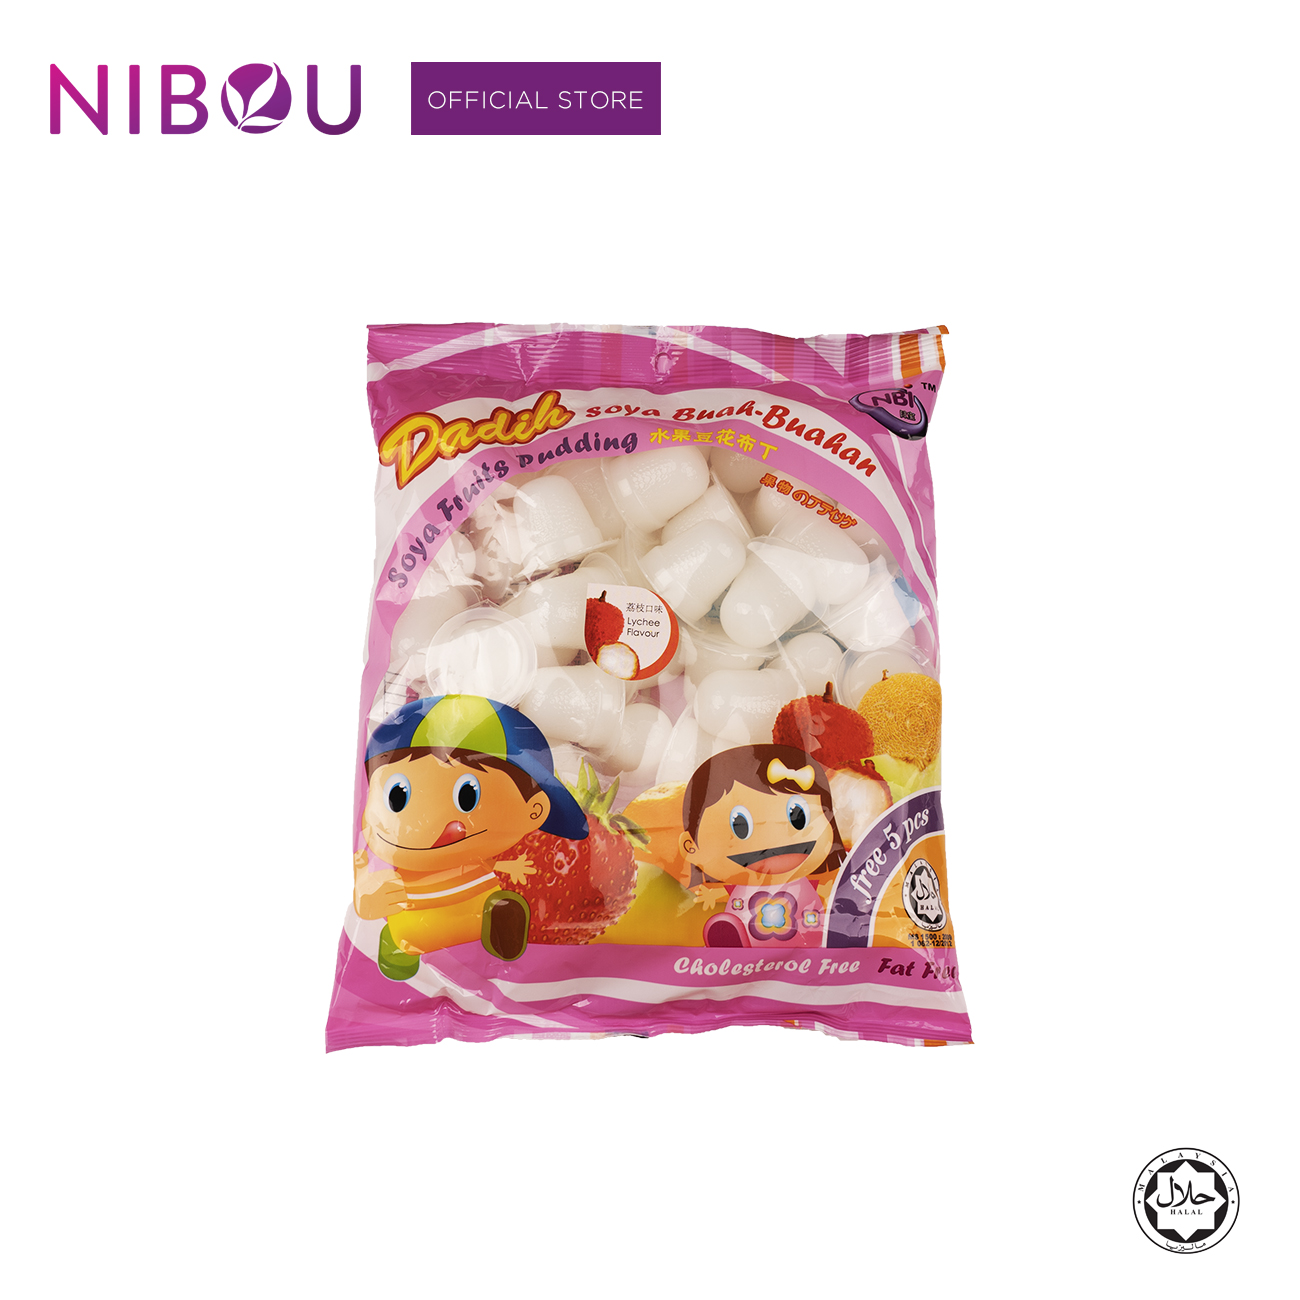 Nibou (NBI) DADIH Soya Fruits Pudding Lychee (Free 5 Pcs) (16gm x 45's x 12)